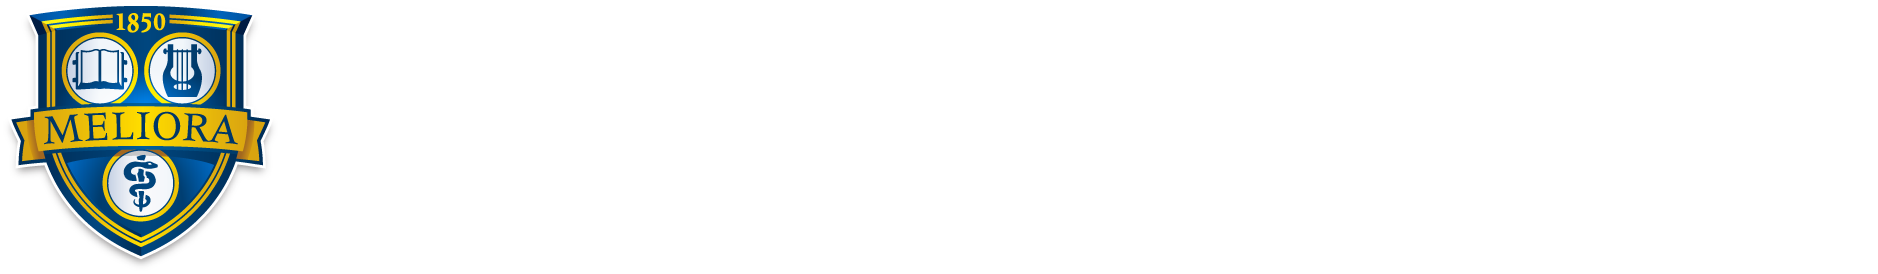 UR Medicine Thompson Health Logo with Meliora shield